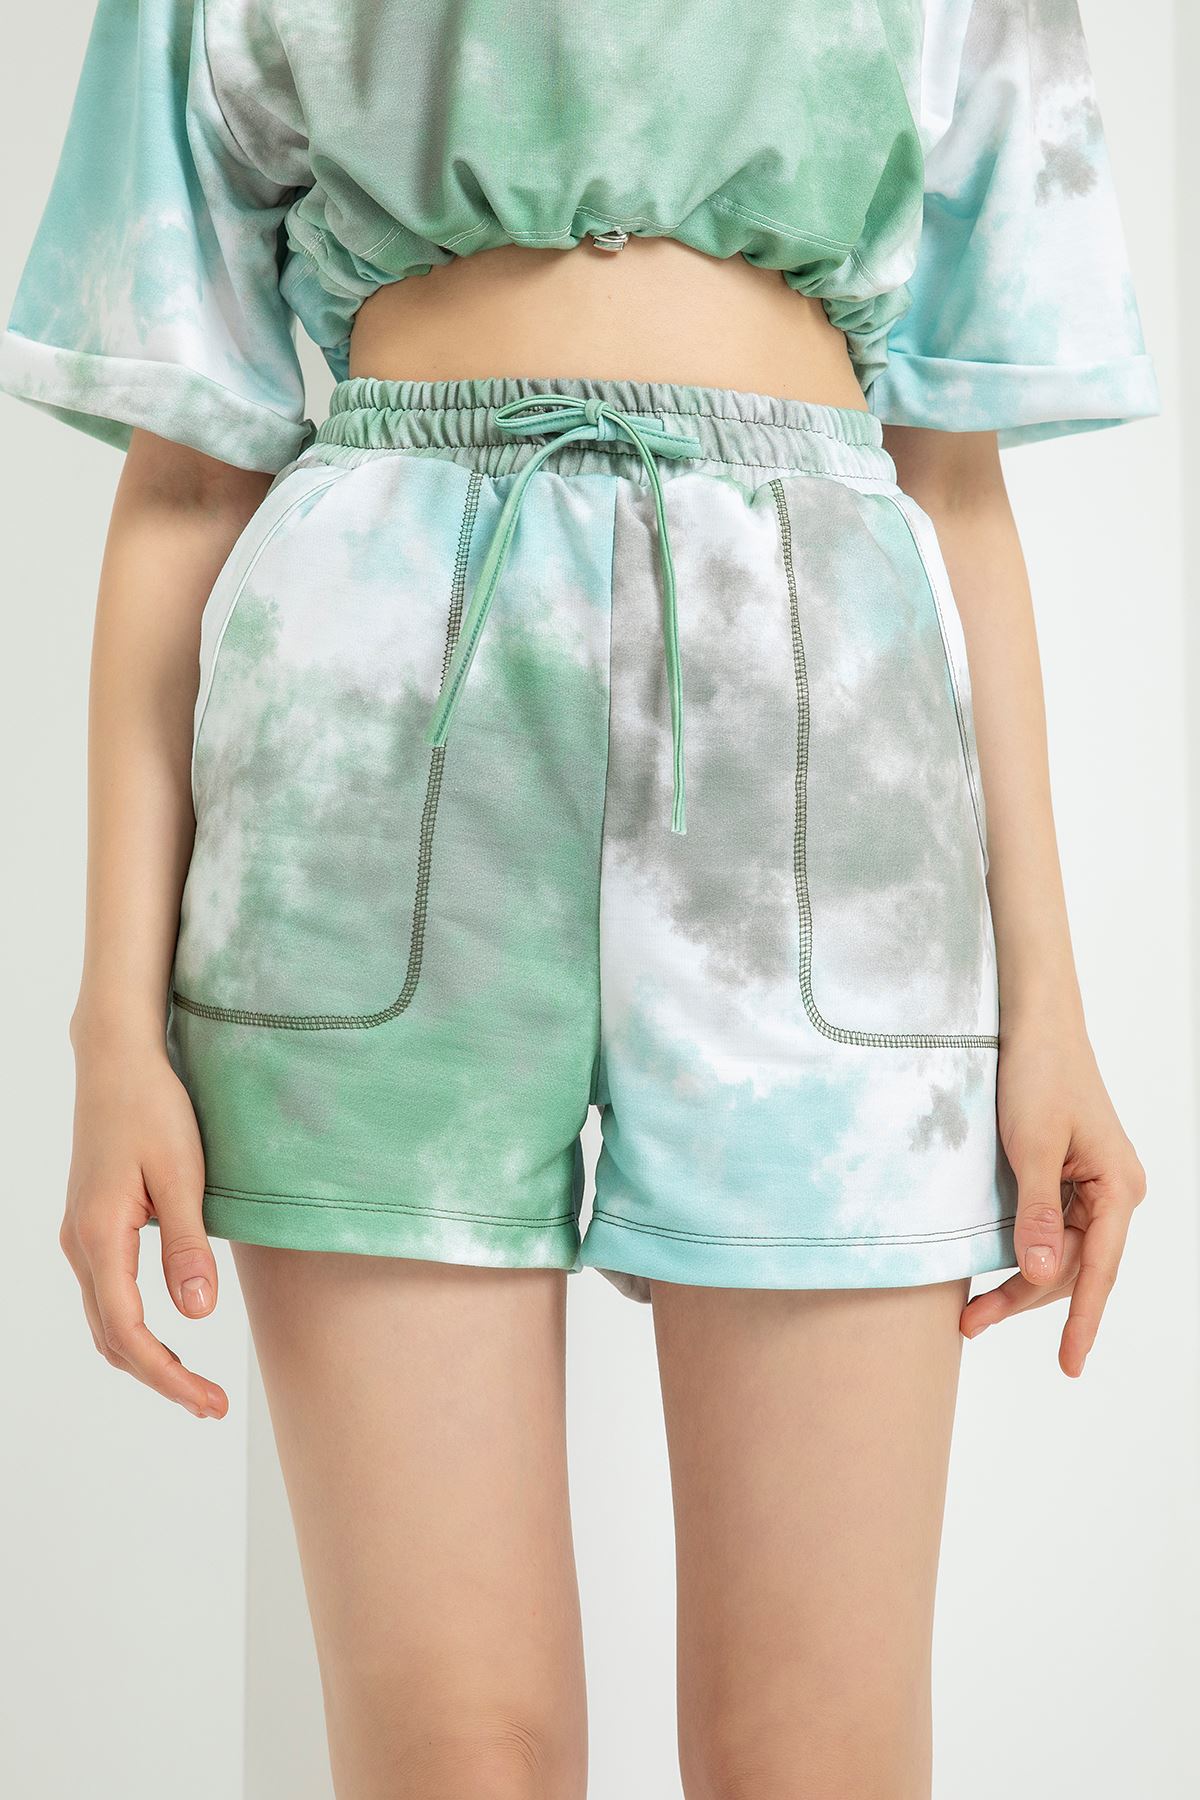 Double Knit Fabric Comfy Fit Cloud Print Women Shorts - Green